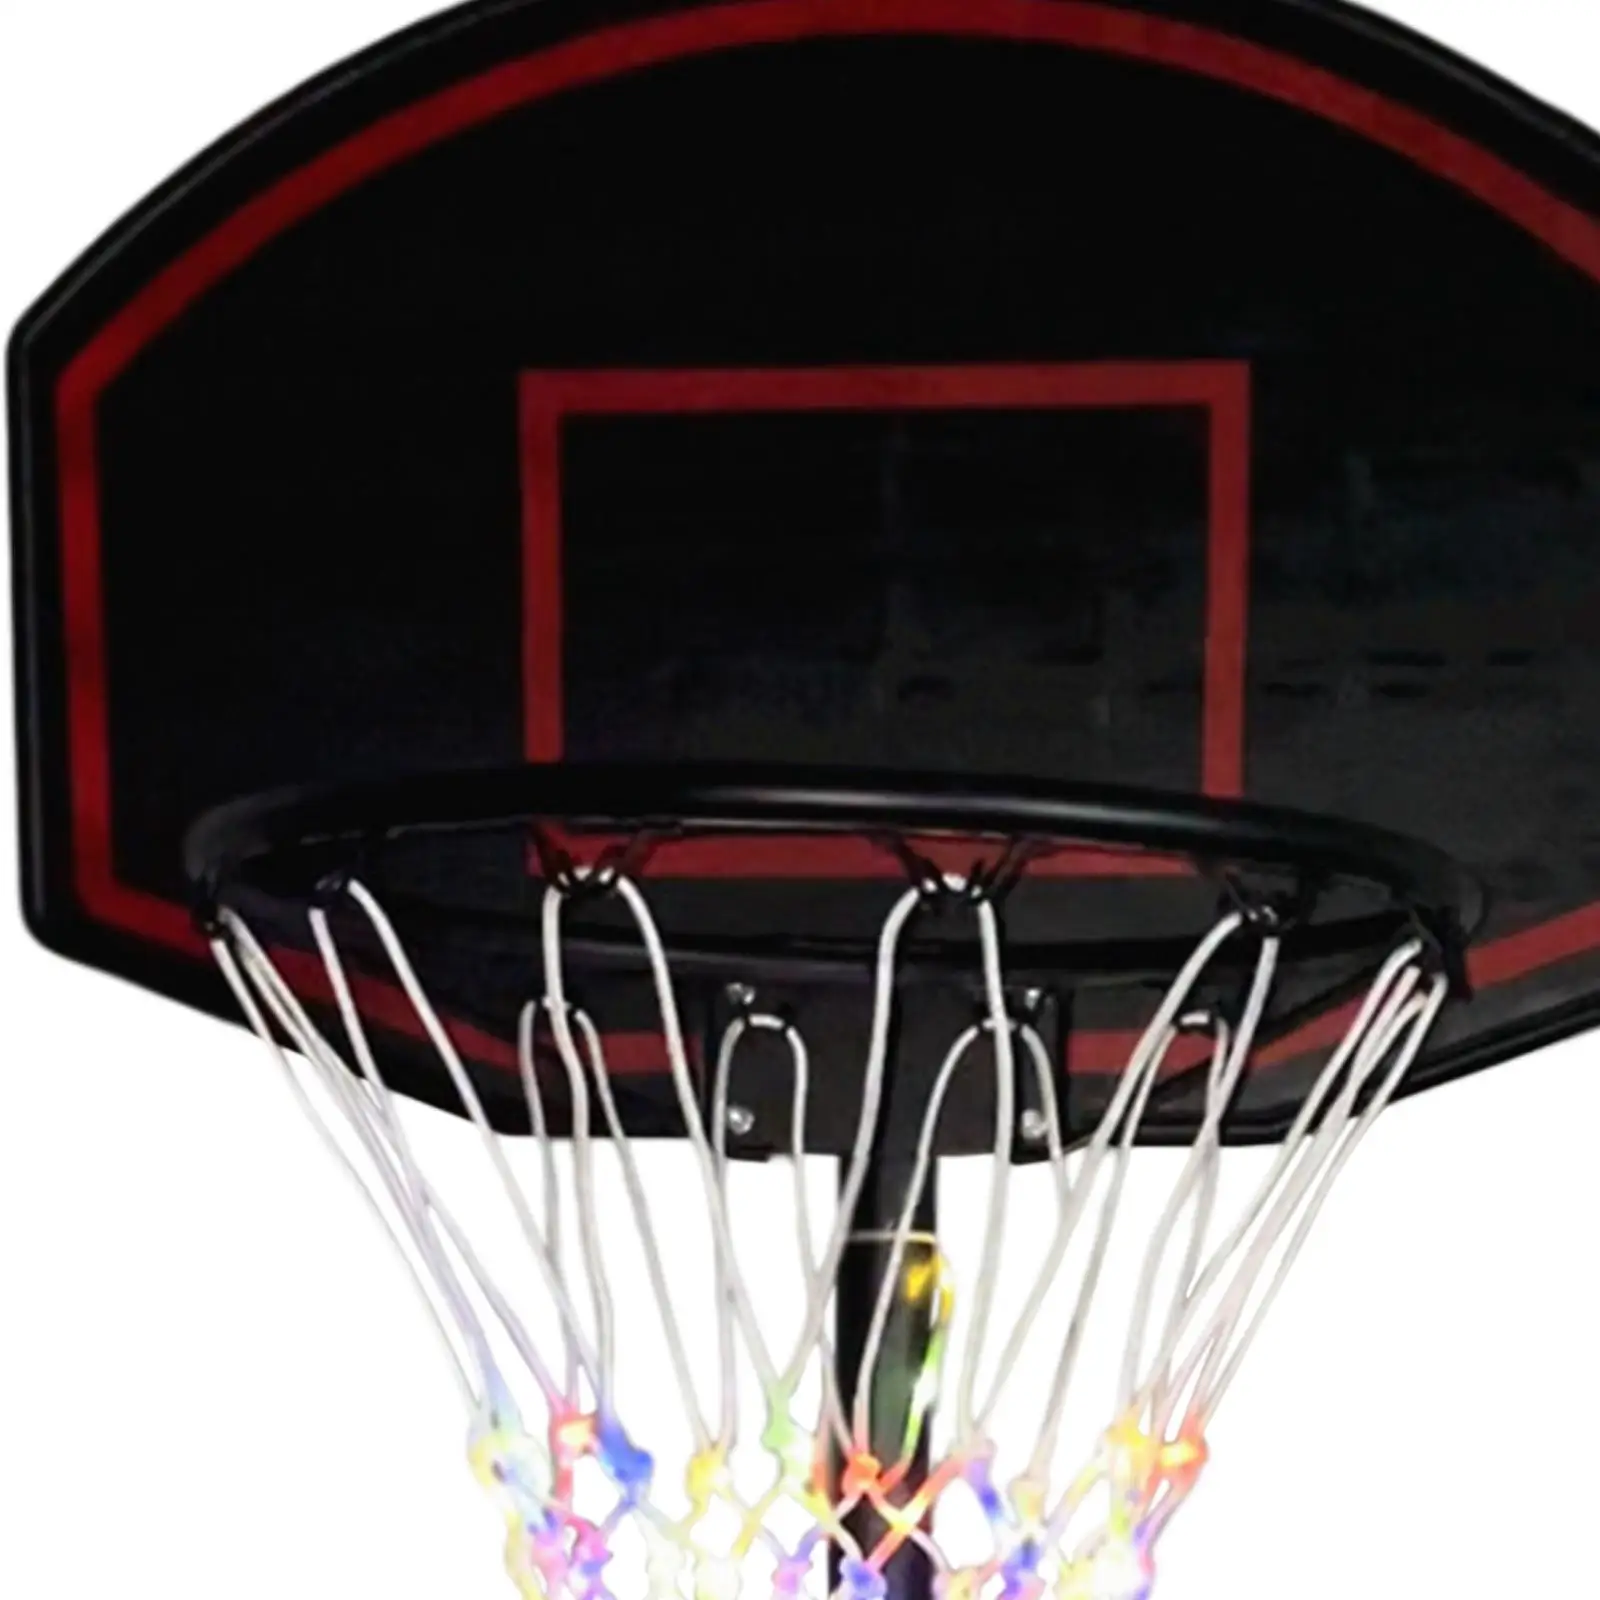 Luminous Outdoor Nylon Hoop Net Remote Control Remote Control Basketball Rim LED Light for Pool Outside Kids Boys Girls Children